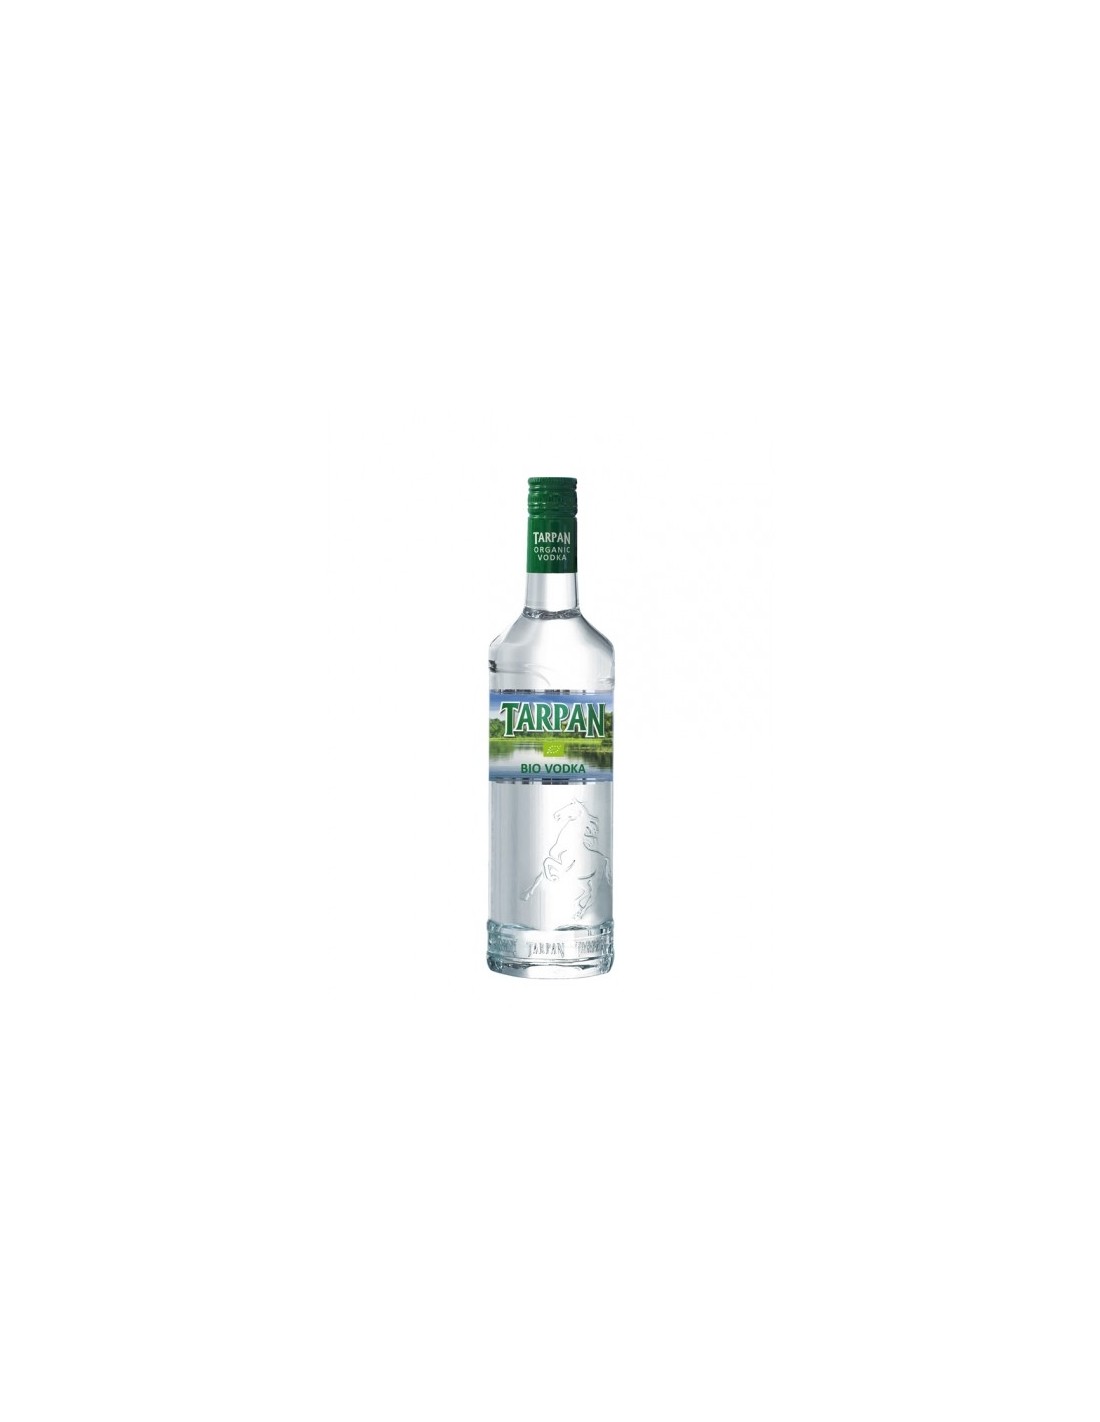 Vodca bio Tarpan Organic 0.7L, 40% alc., Germania alcooldiscount.ro